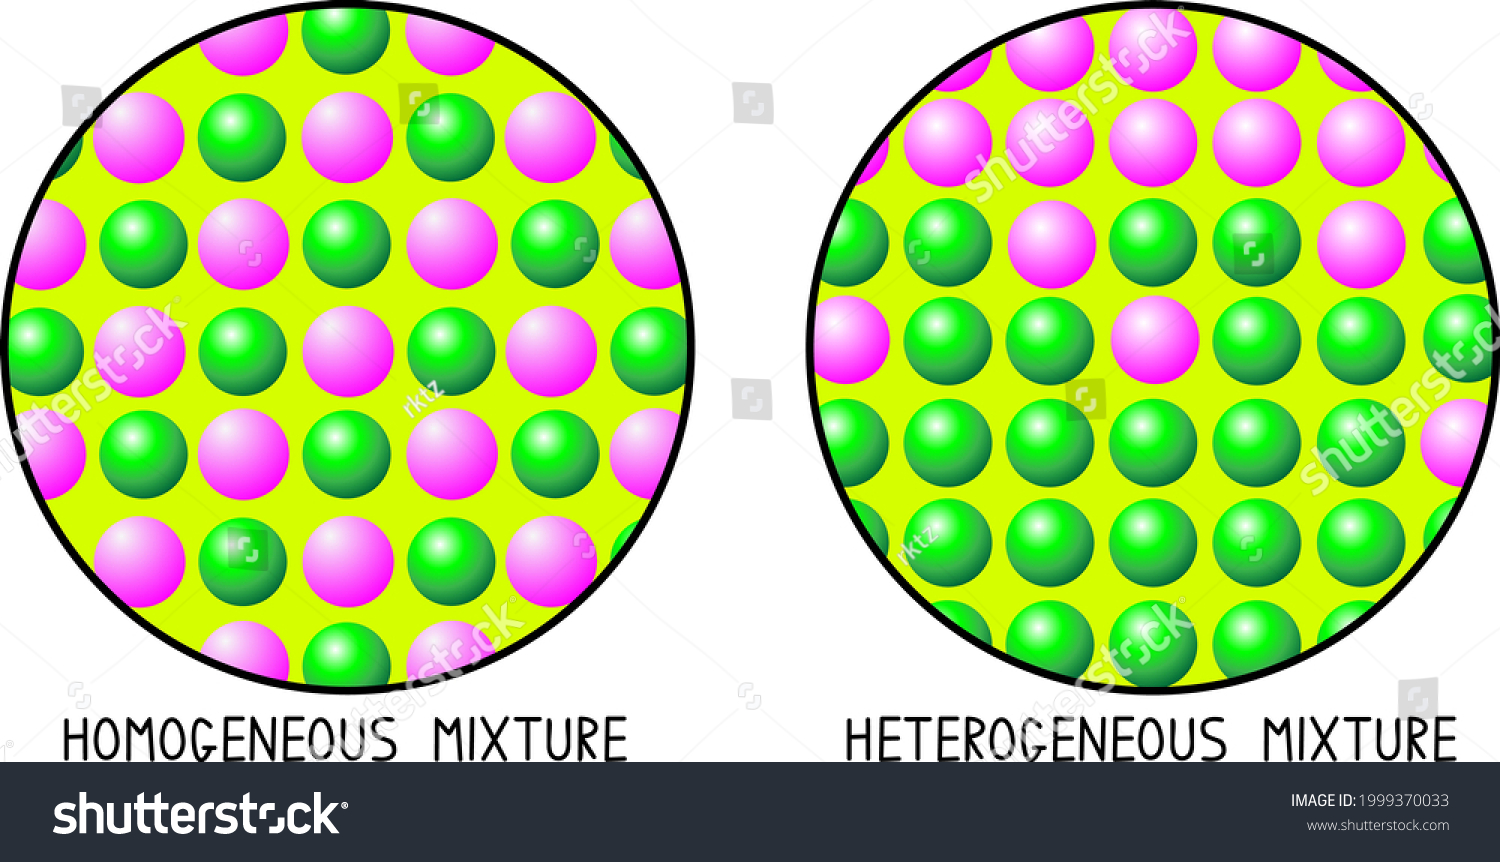 Homogeneous Mixture Vs Heterogeneous Mixture Particle Stock Vector Royalty Free 1999370033